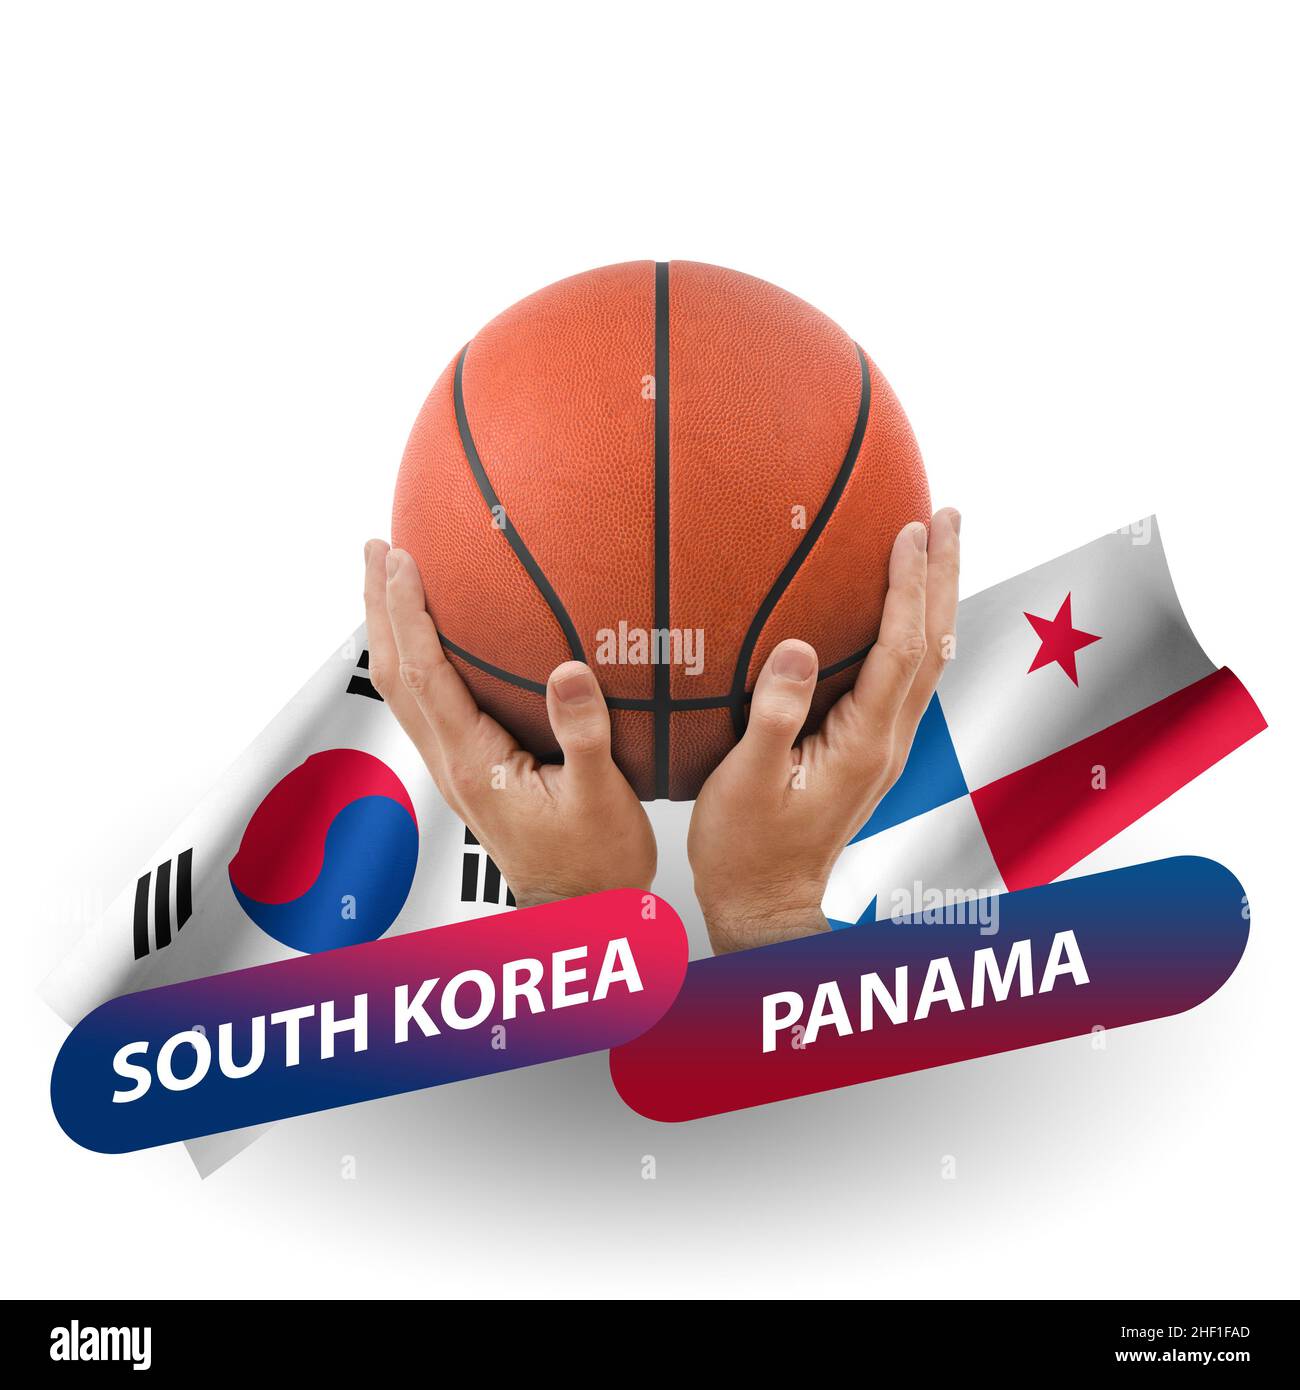 South Korea Vs Panama High Resolution Stock Photography And Images Alamy